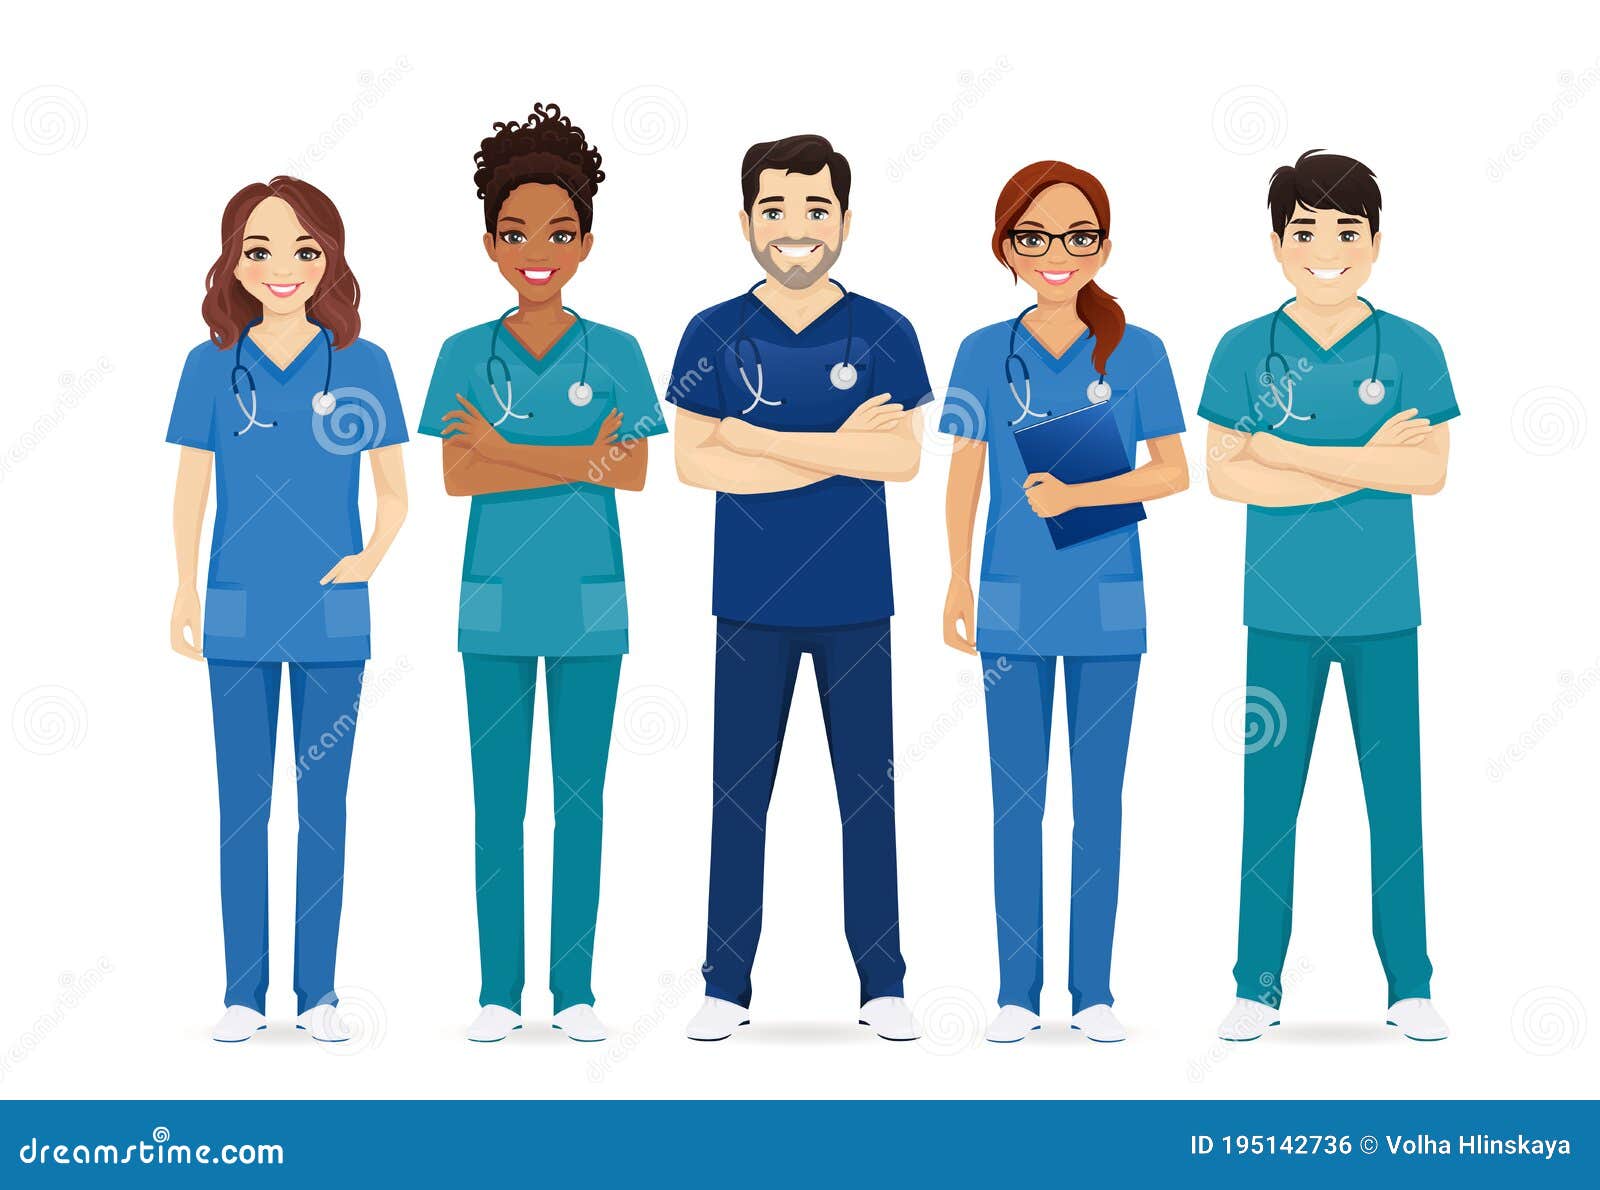 multiethnic nurse characters group